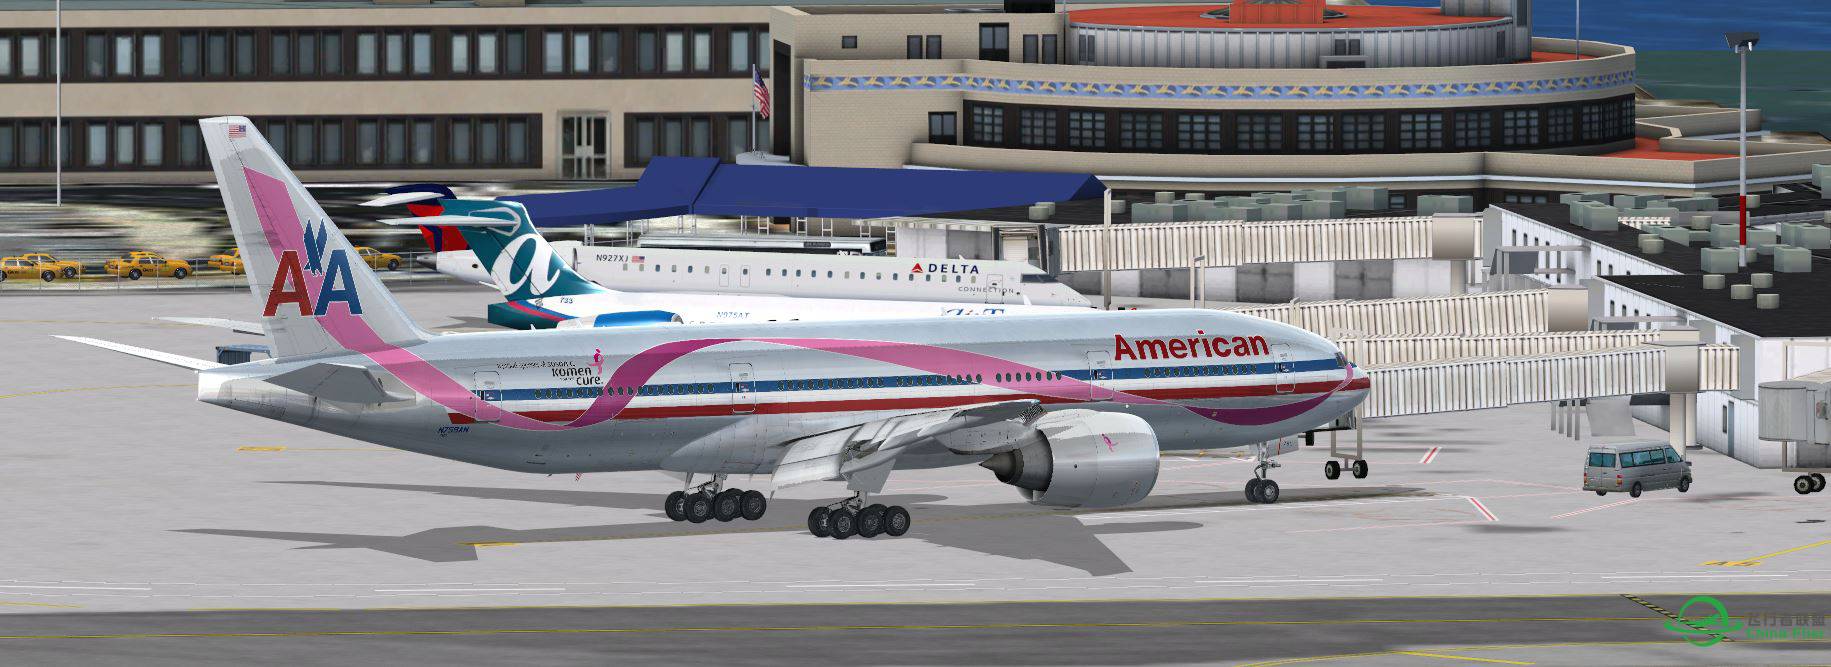 B777 American Airline-7869 